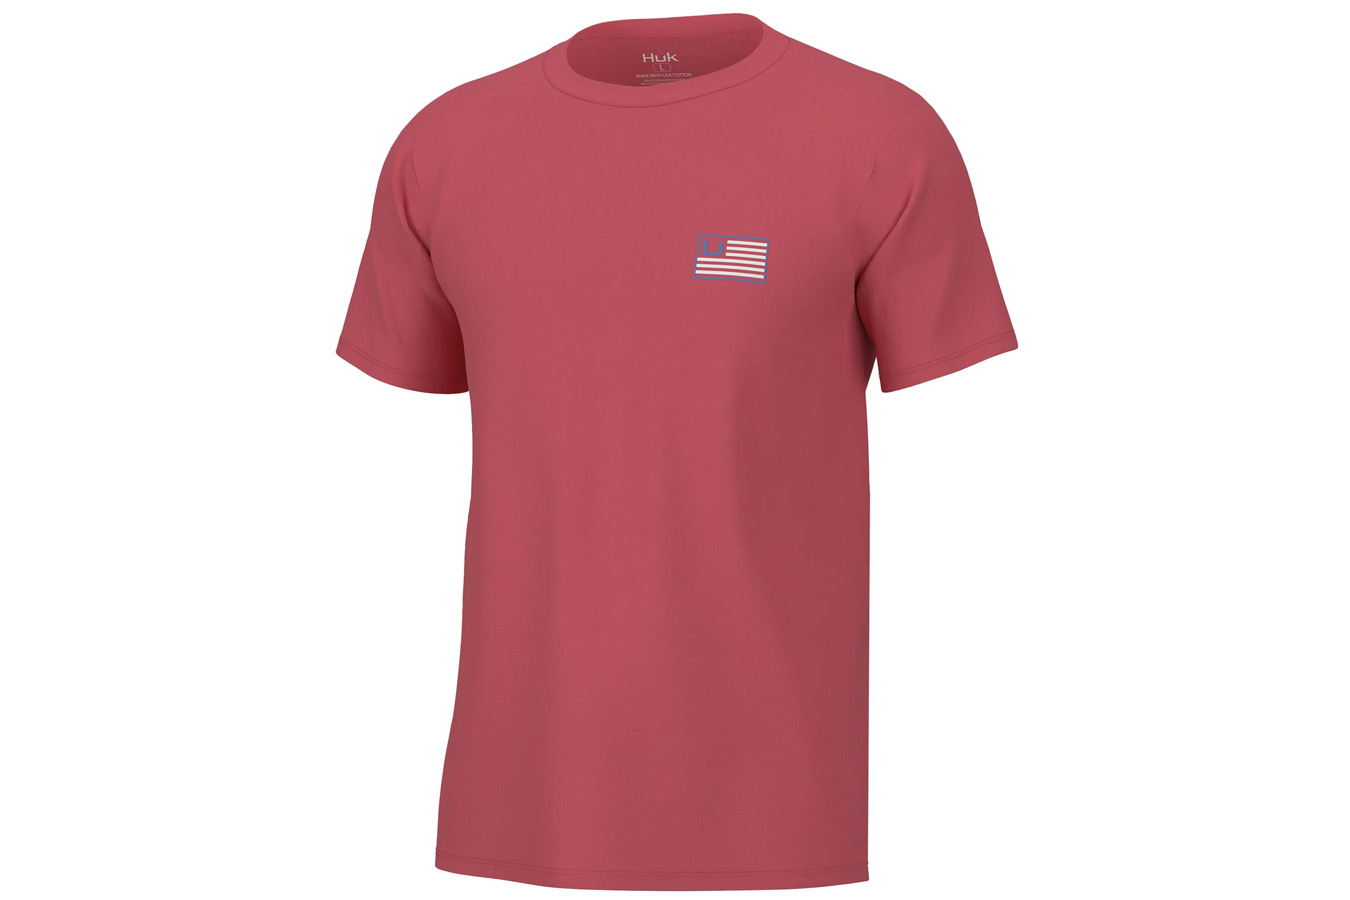 Huk Men's On & Off T-Shirt, Medium, Sunwashed Red